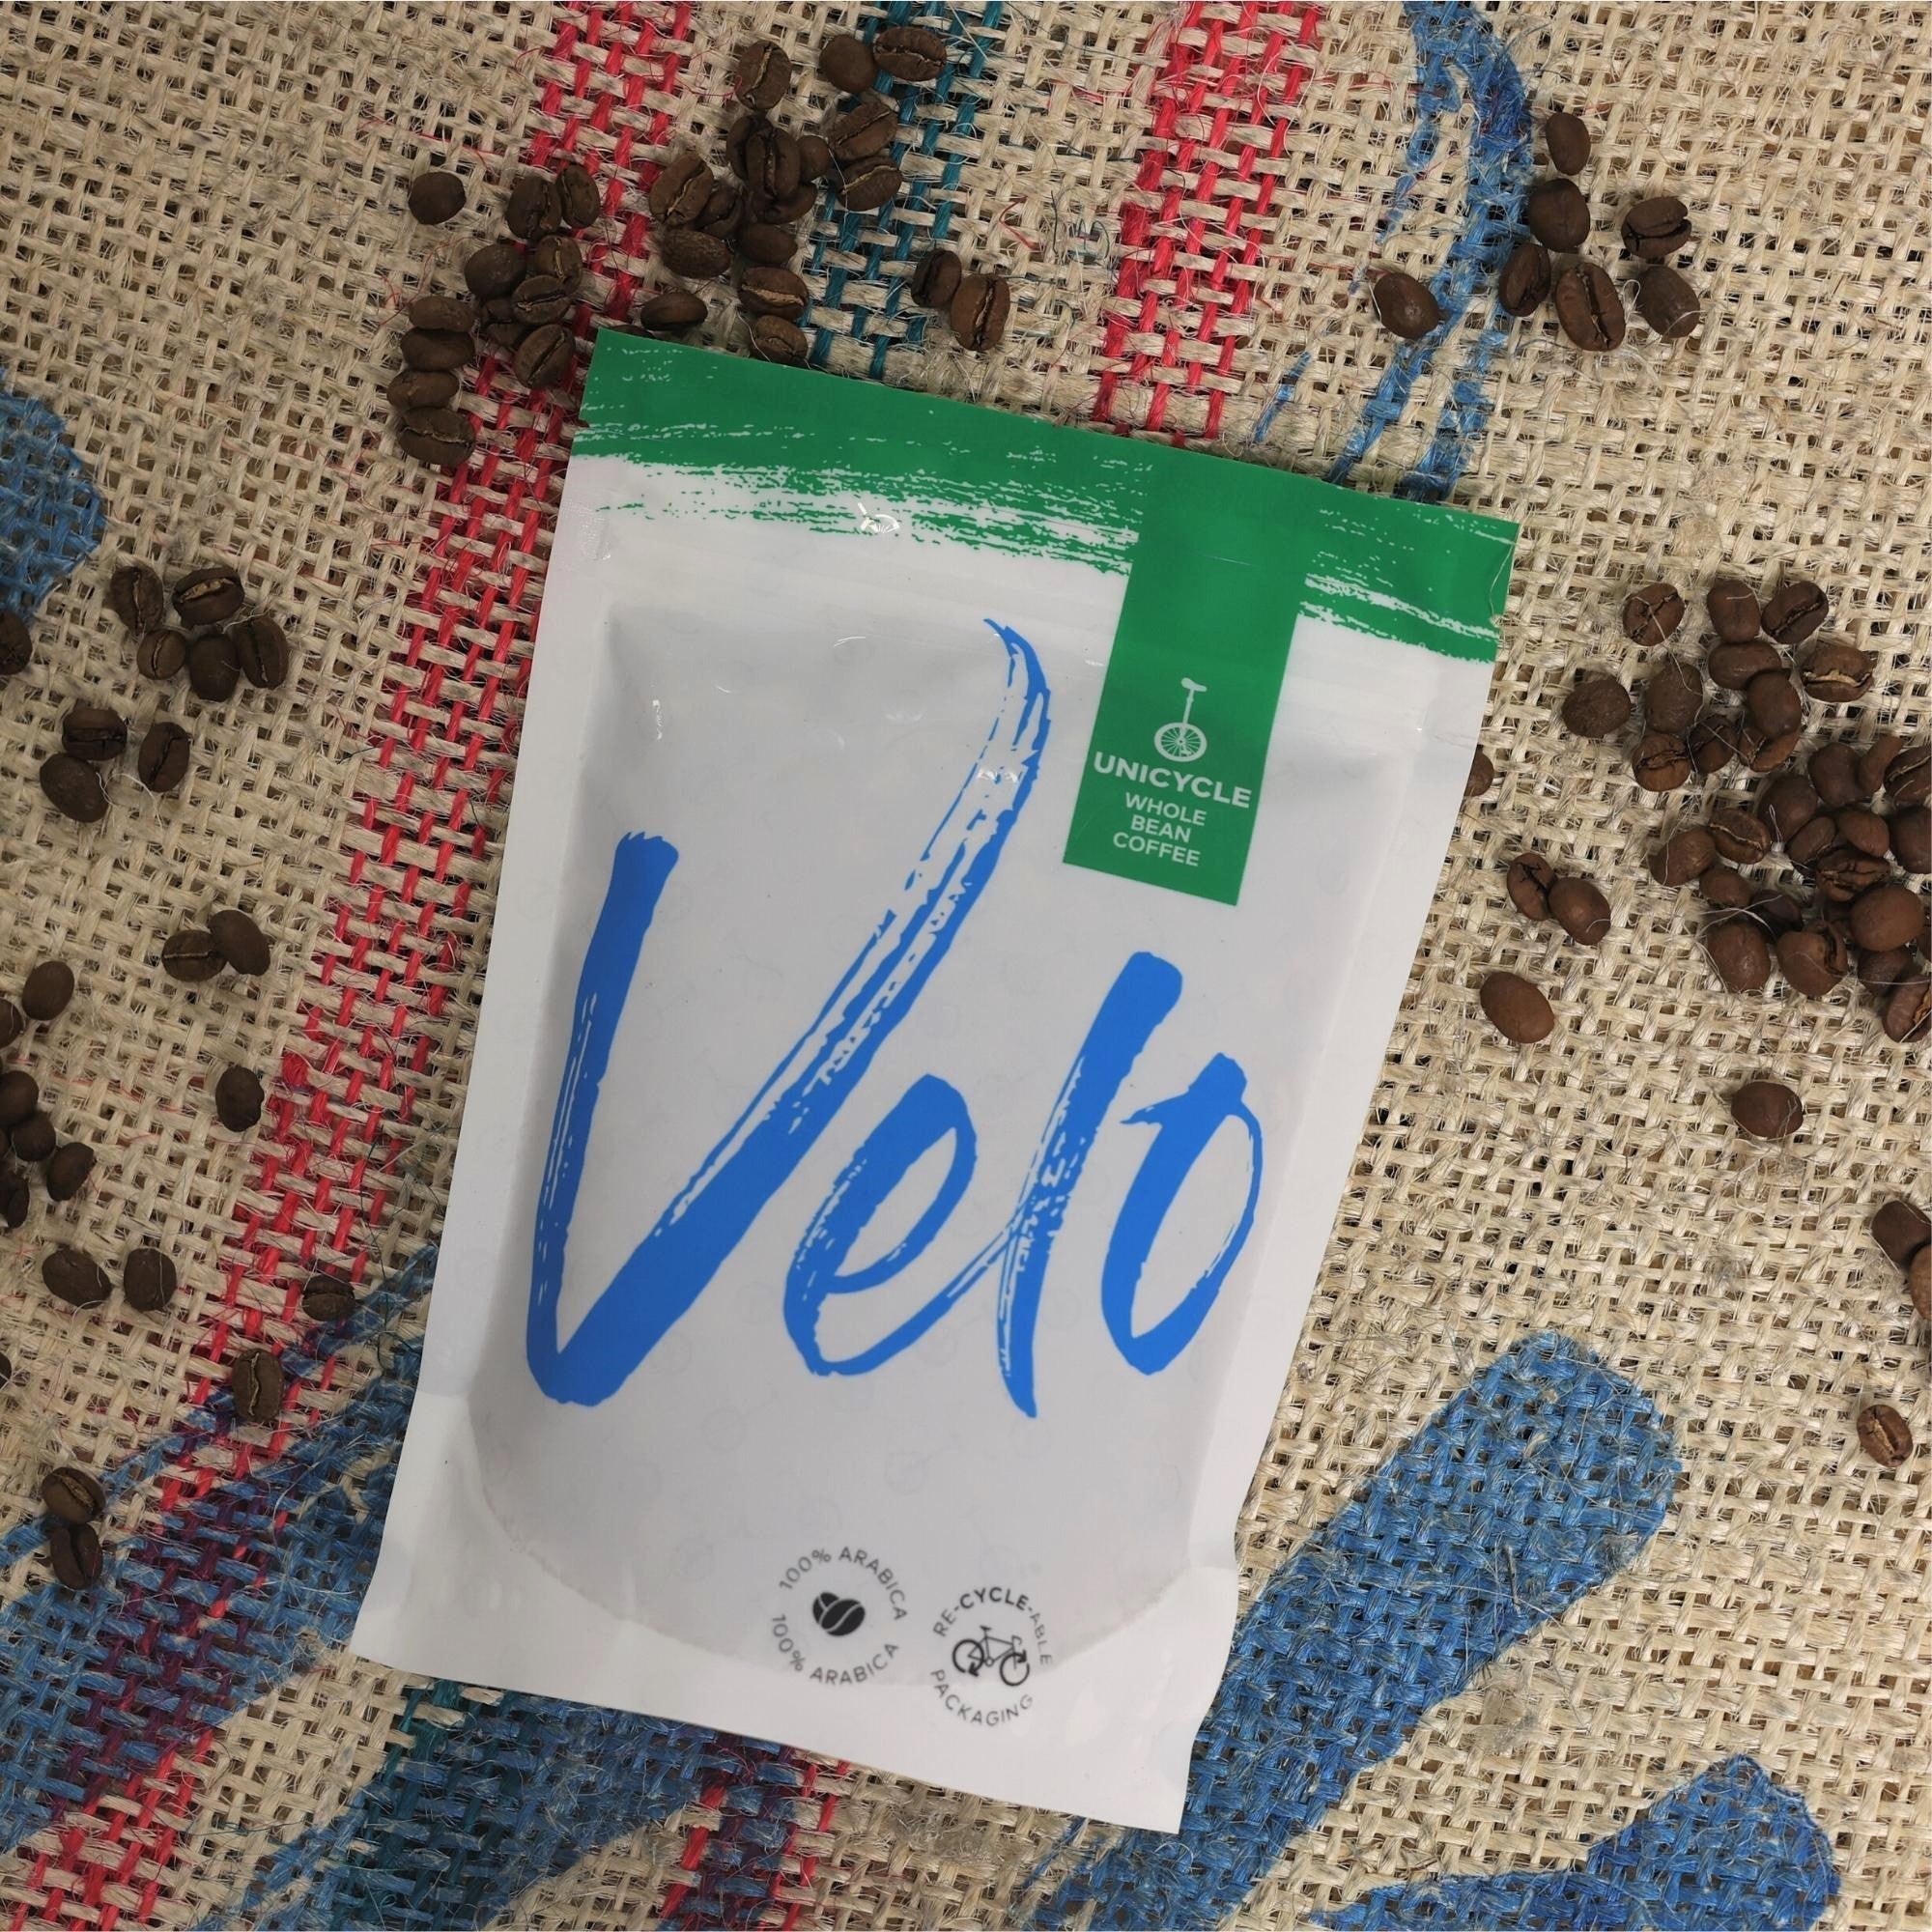 Tinganga 200g Coffee Bag Kenya - Velo Coffee Roasters